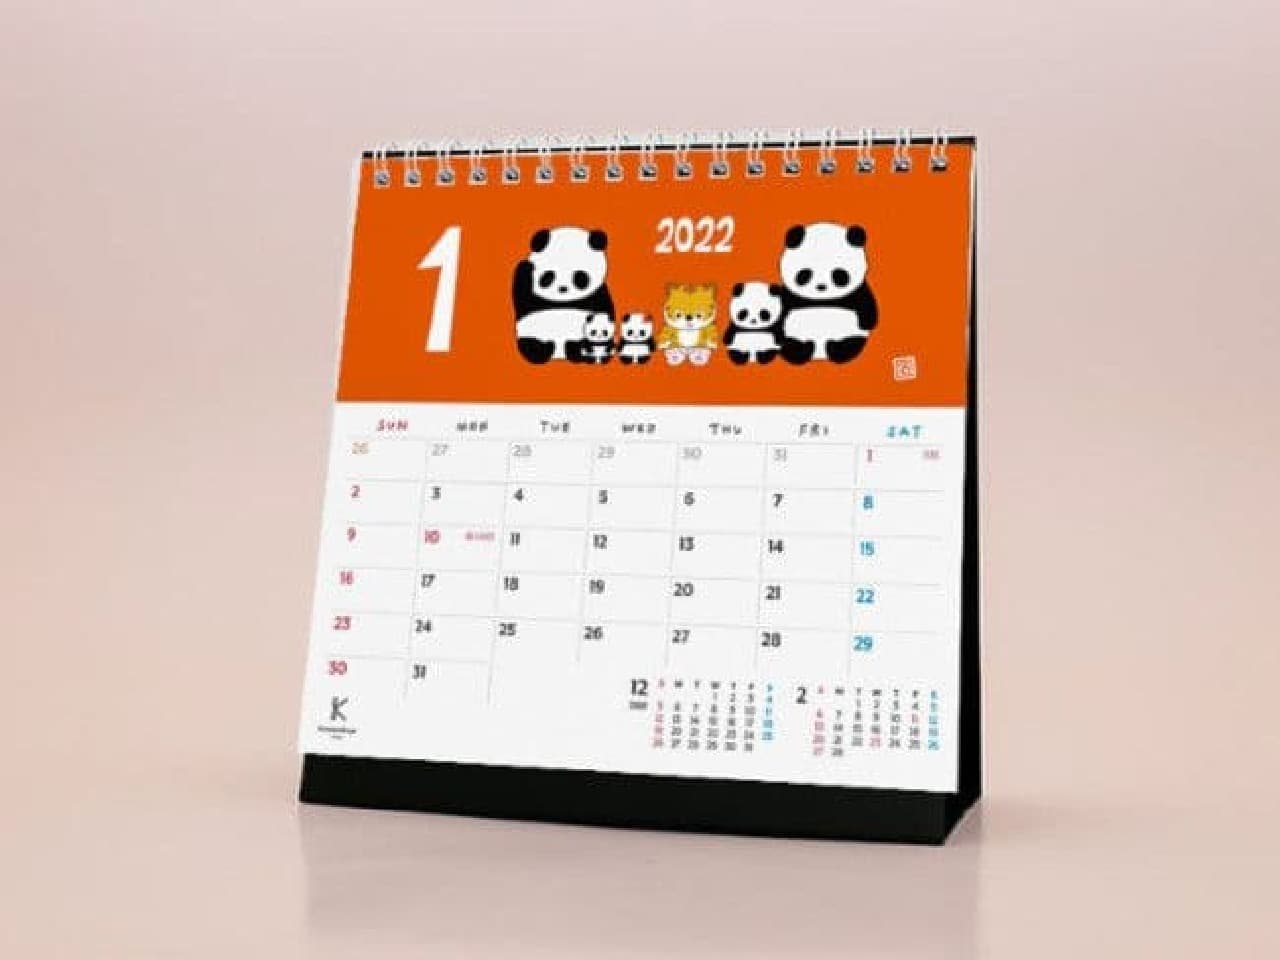 Panda calendar of vine "lucky bag"